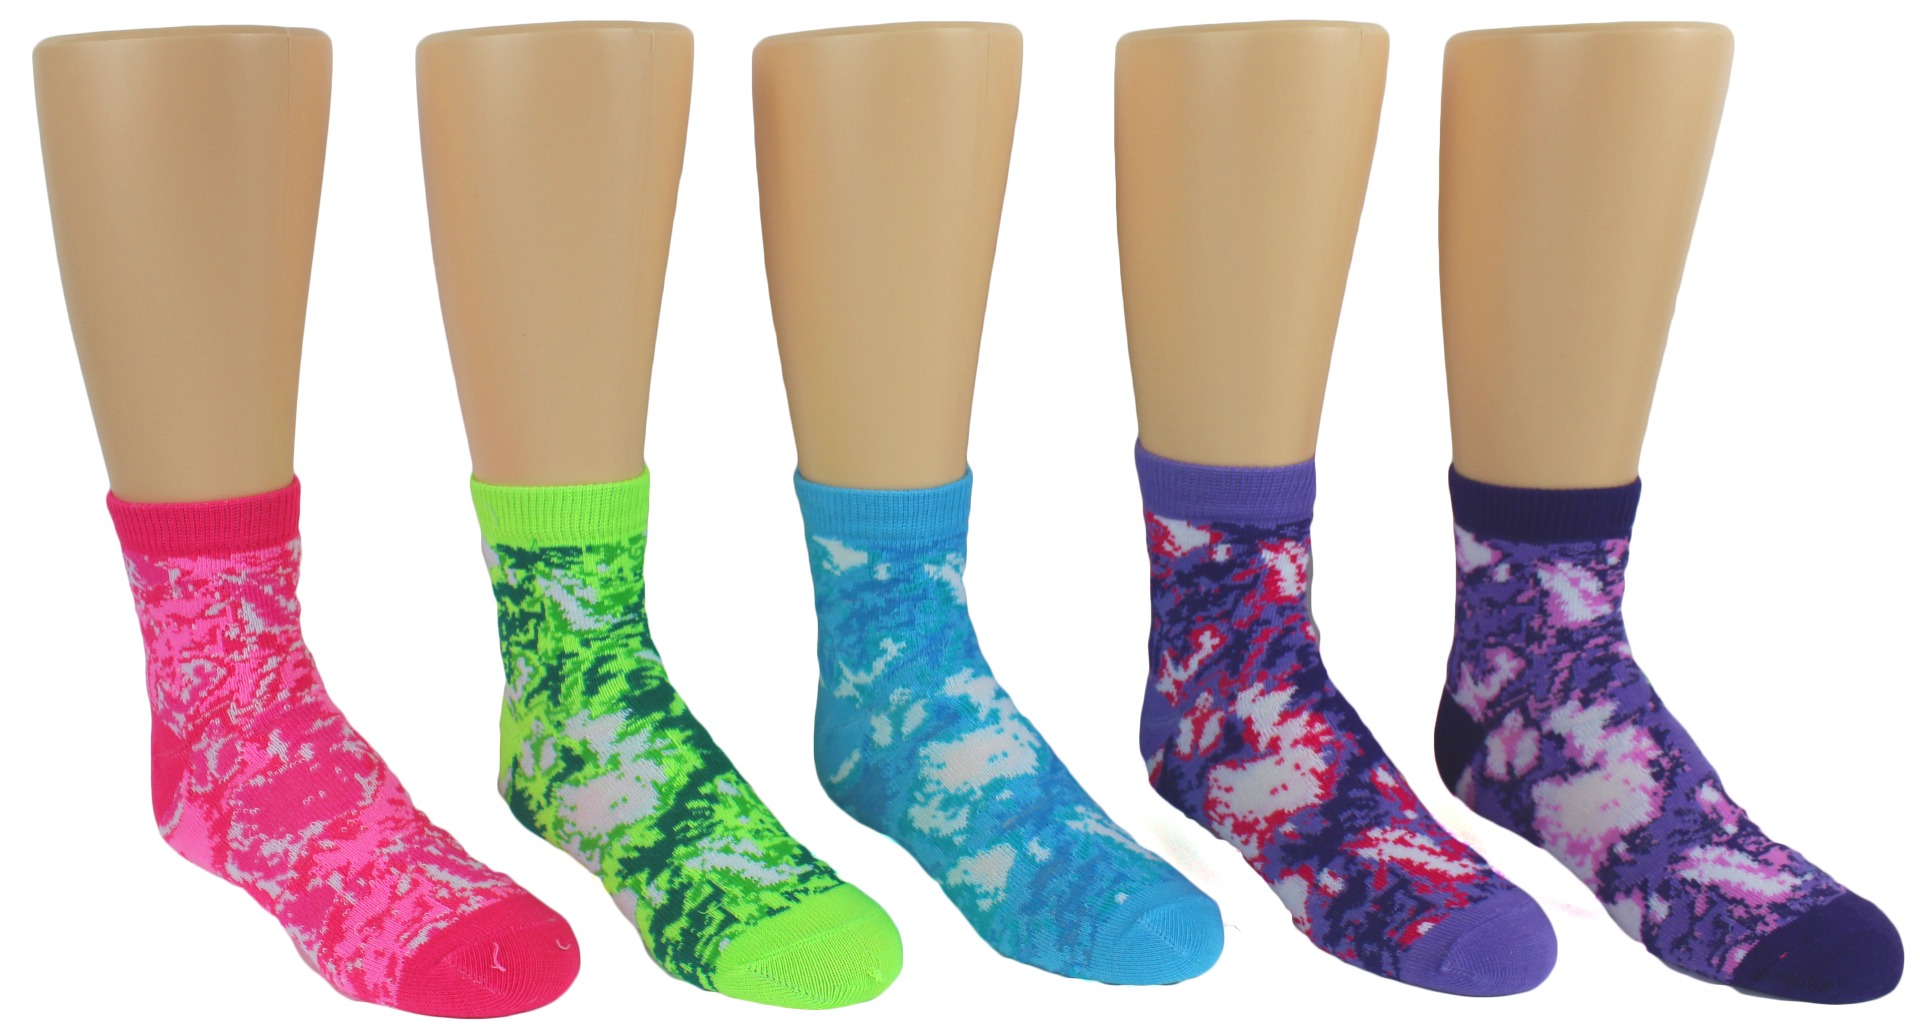 Boy's & Girl's Novelty Crew Socks - TIE Dye - Size 6-8